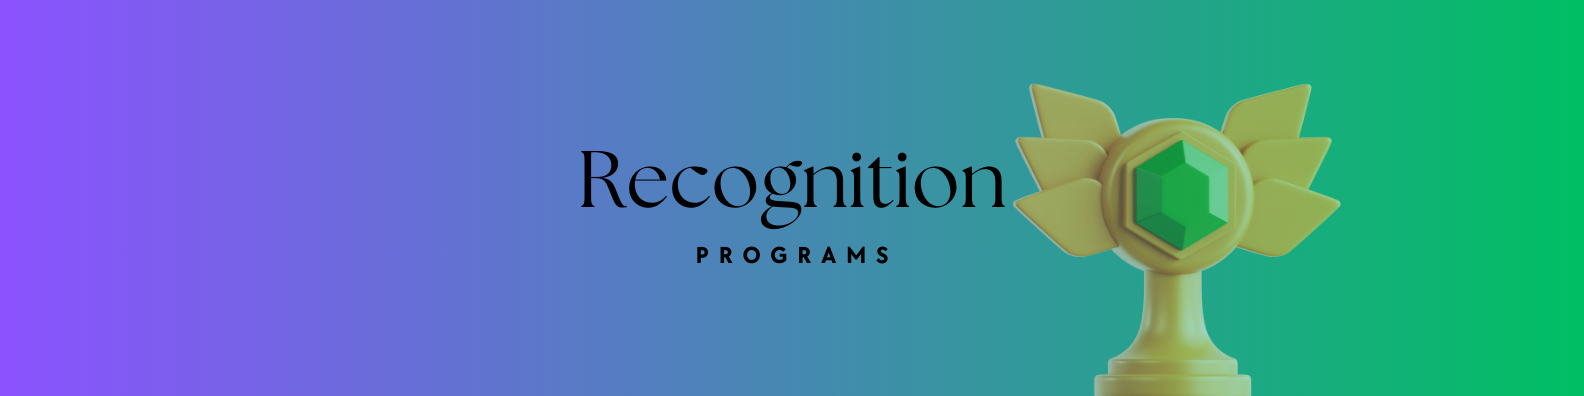 recognition programs for employee appreciation 